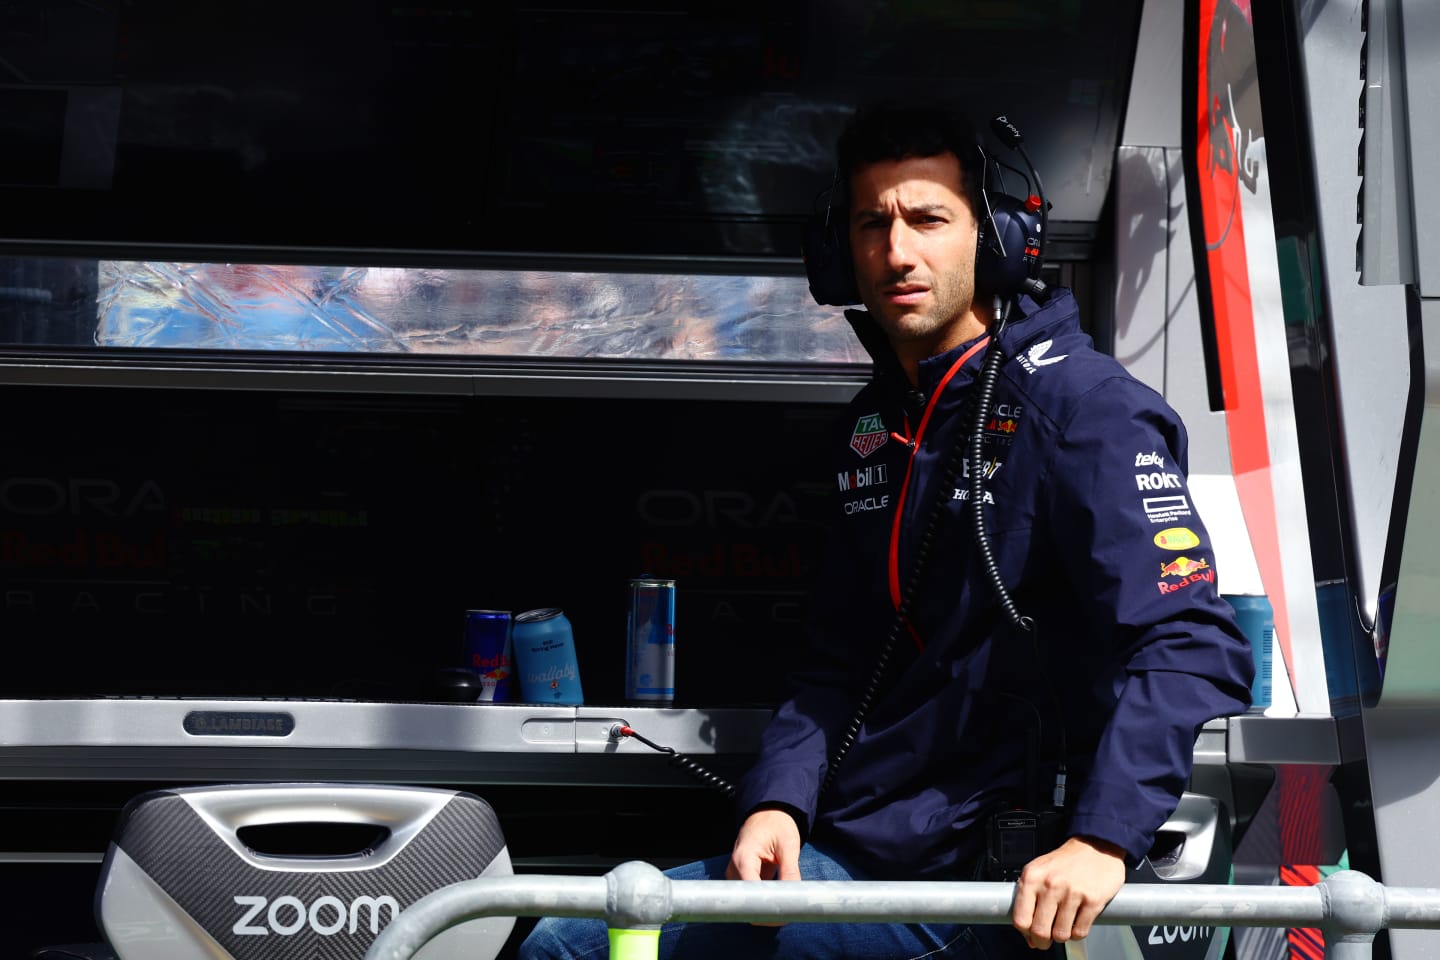 MELBOURNE, AUSTRALIA - MARCH 31: Daniel Ricciardo of Australia and Oracle Red Bull Racing looks on